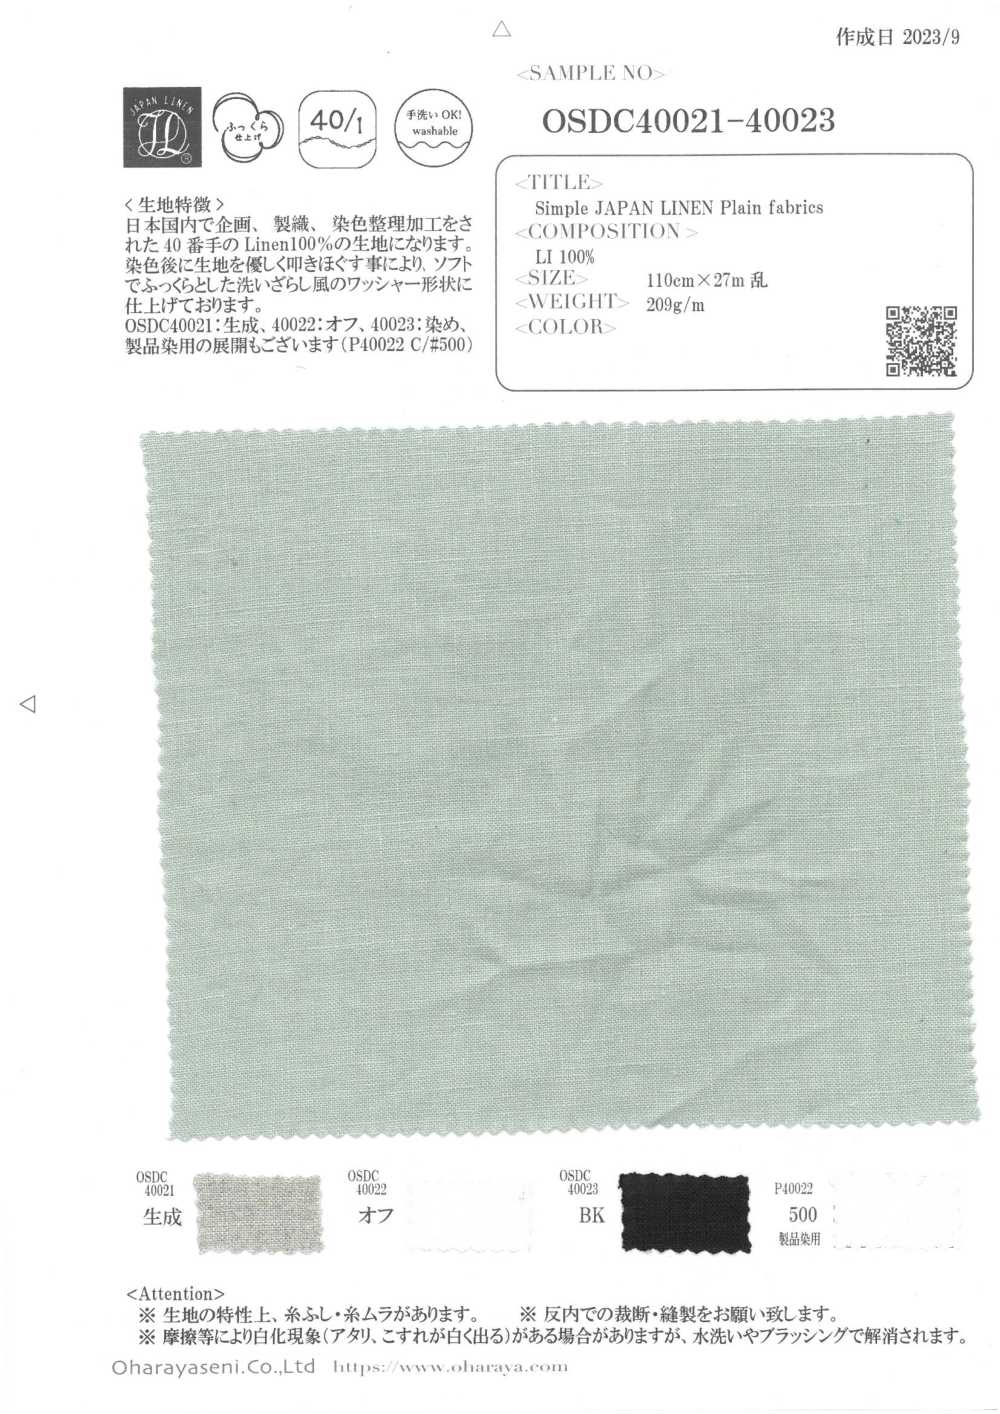 OSDC40023 Simple JAPAN LINEN Plain Fabrics (Color)[Textile / Fabric] Oharayaseni